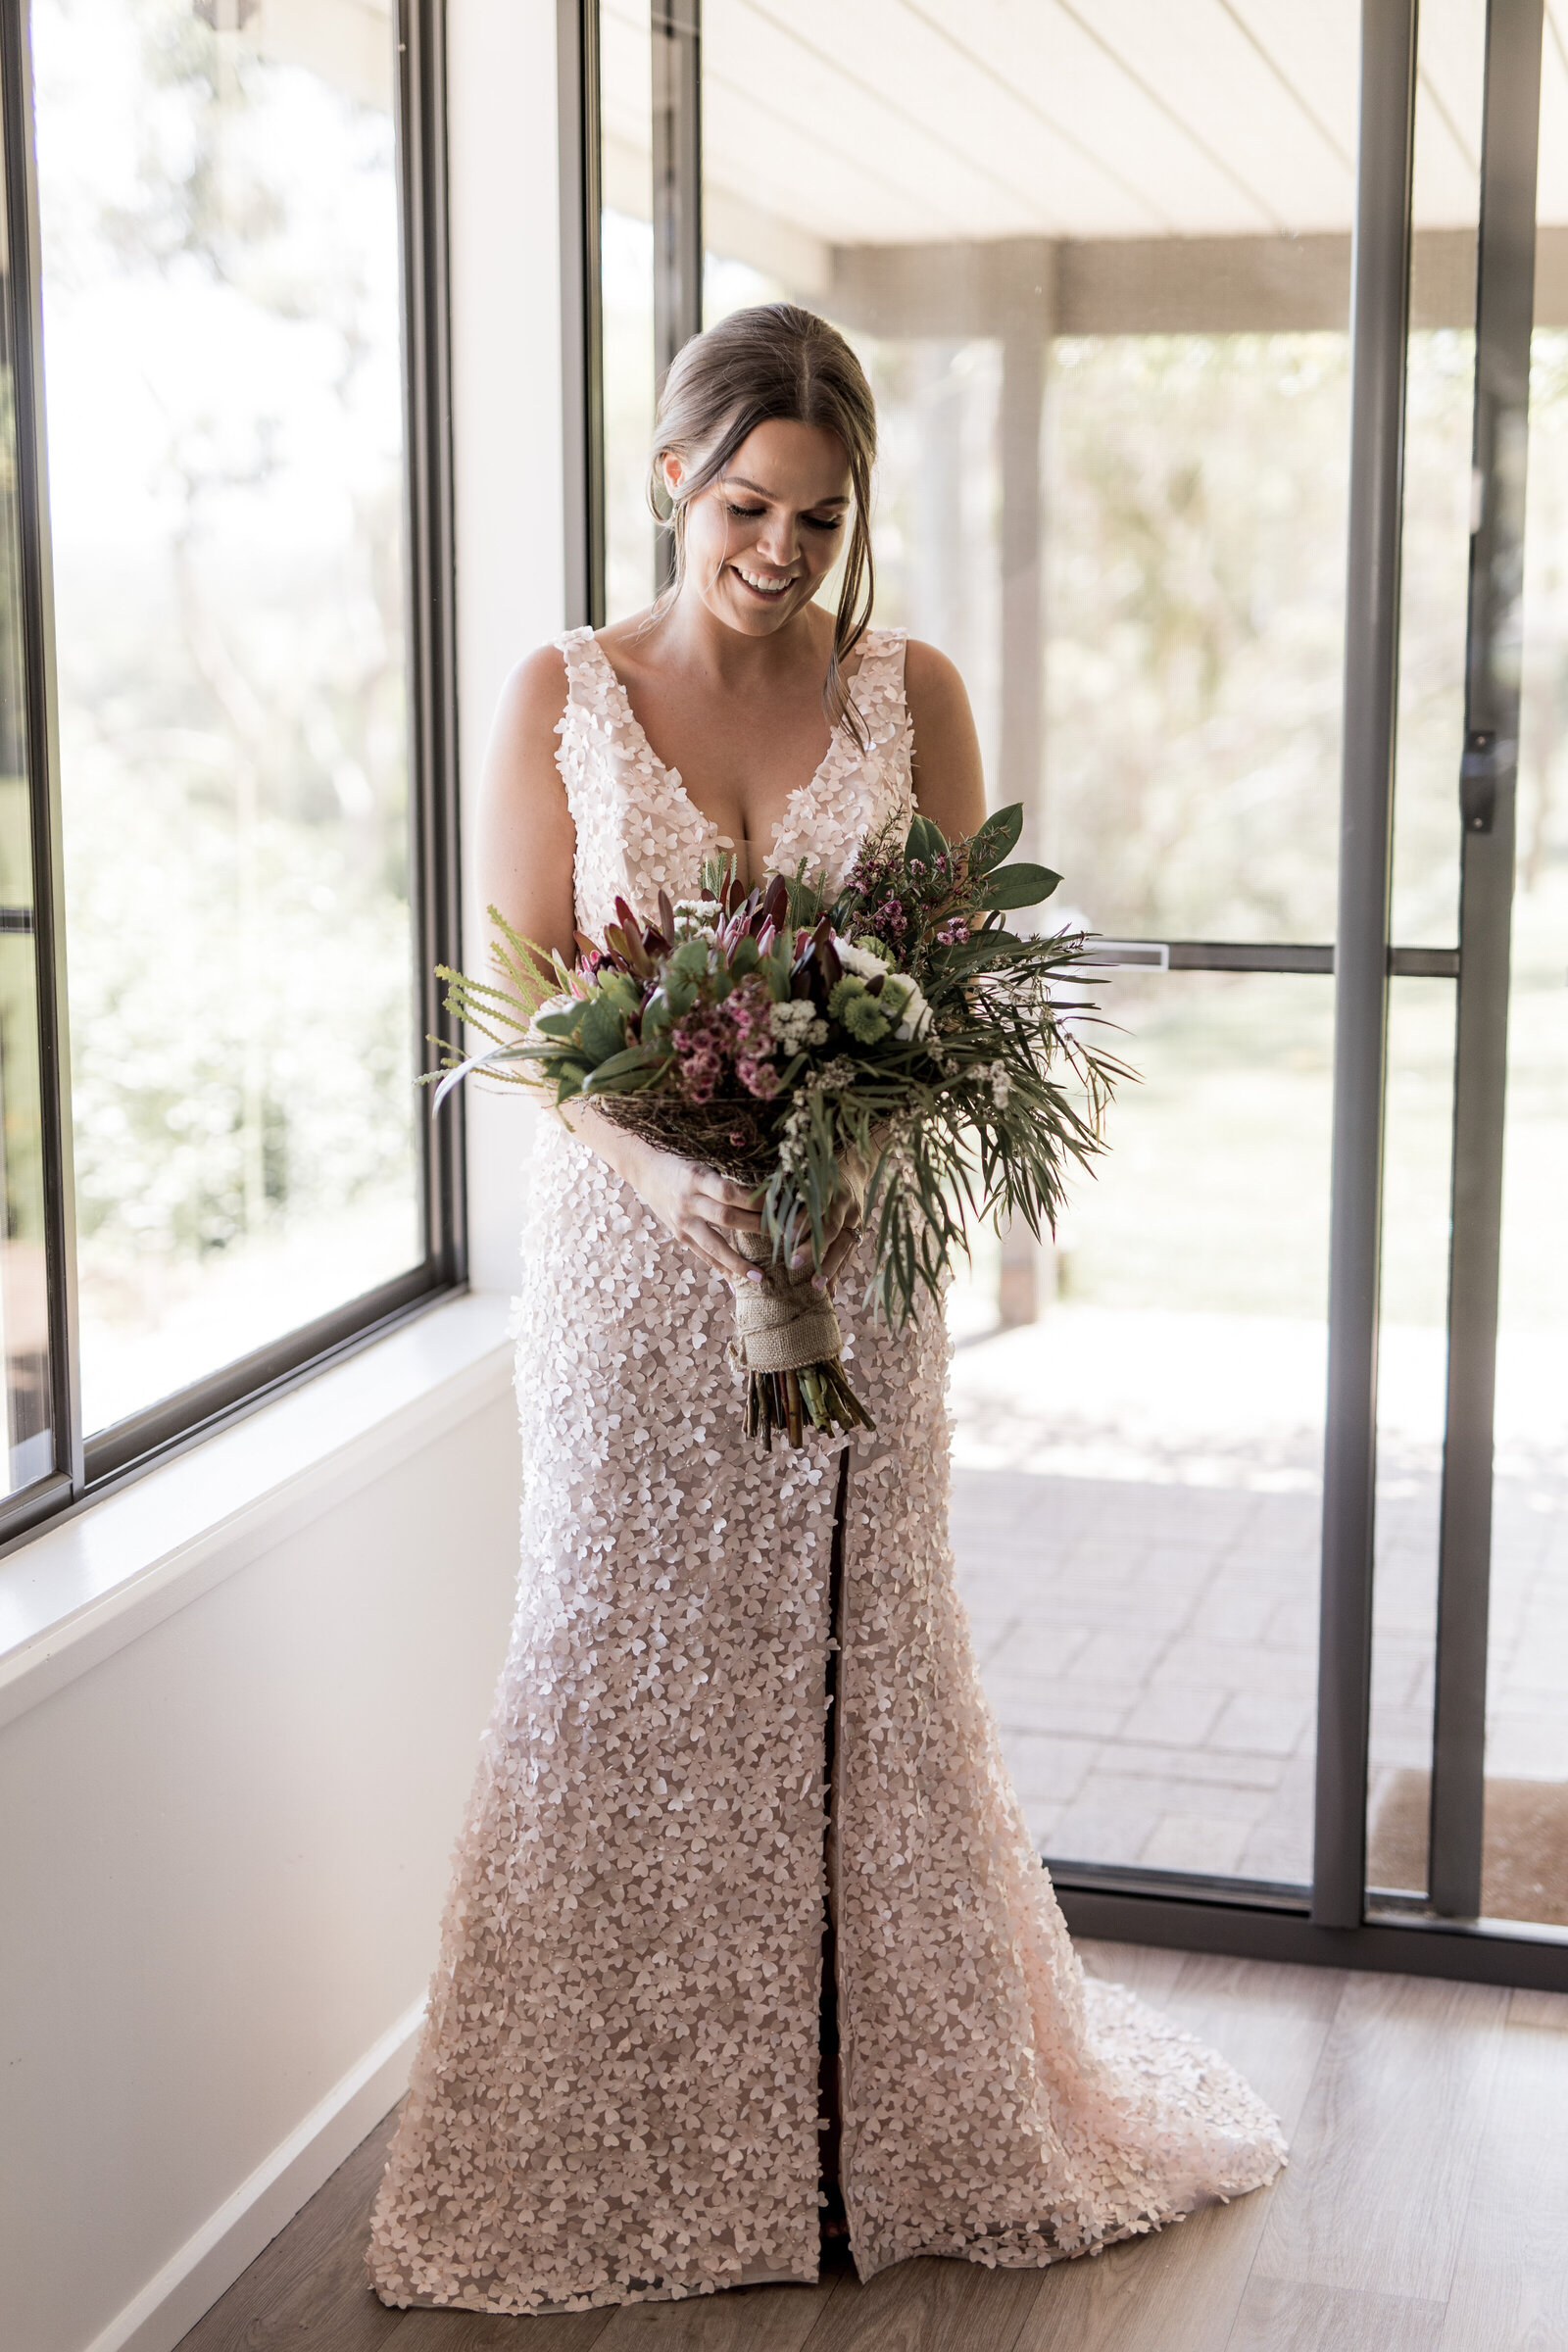 Chloe-Benny-Rexvil-Photography-Adelaide-Wedding-Photographer-125